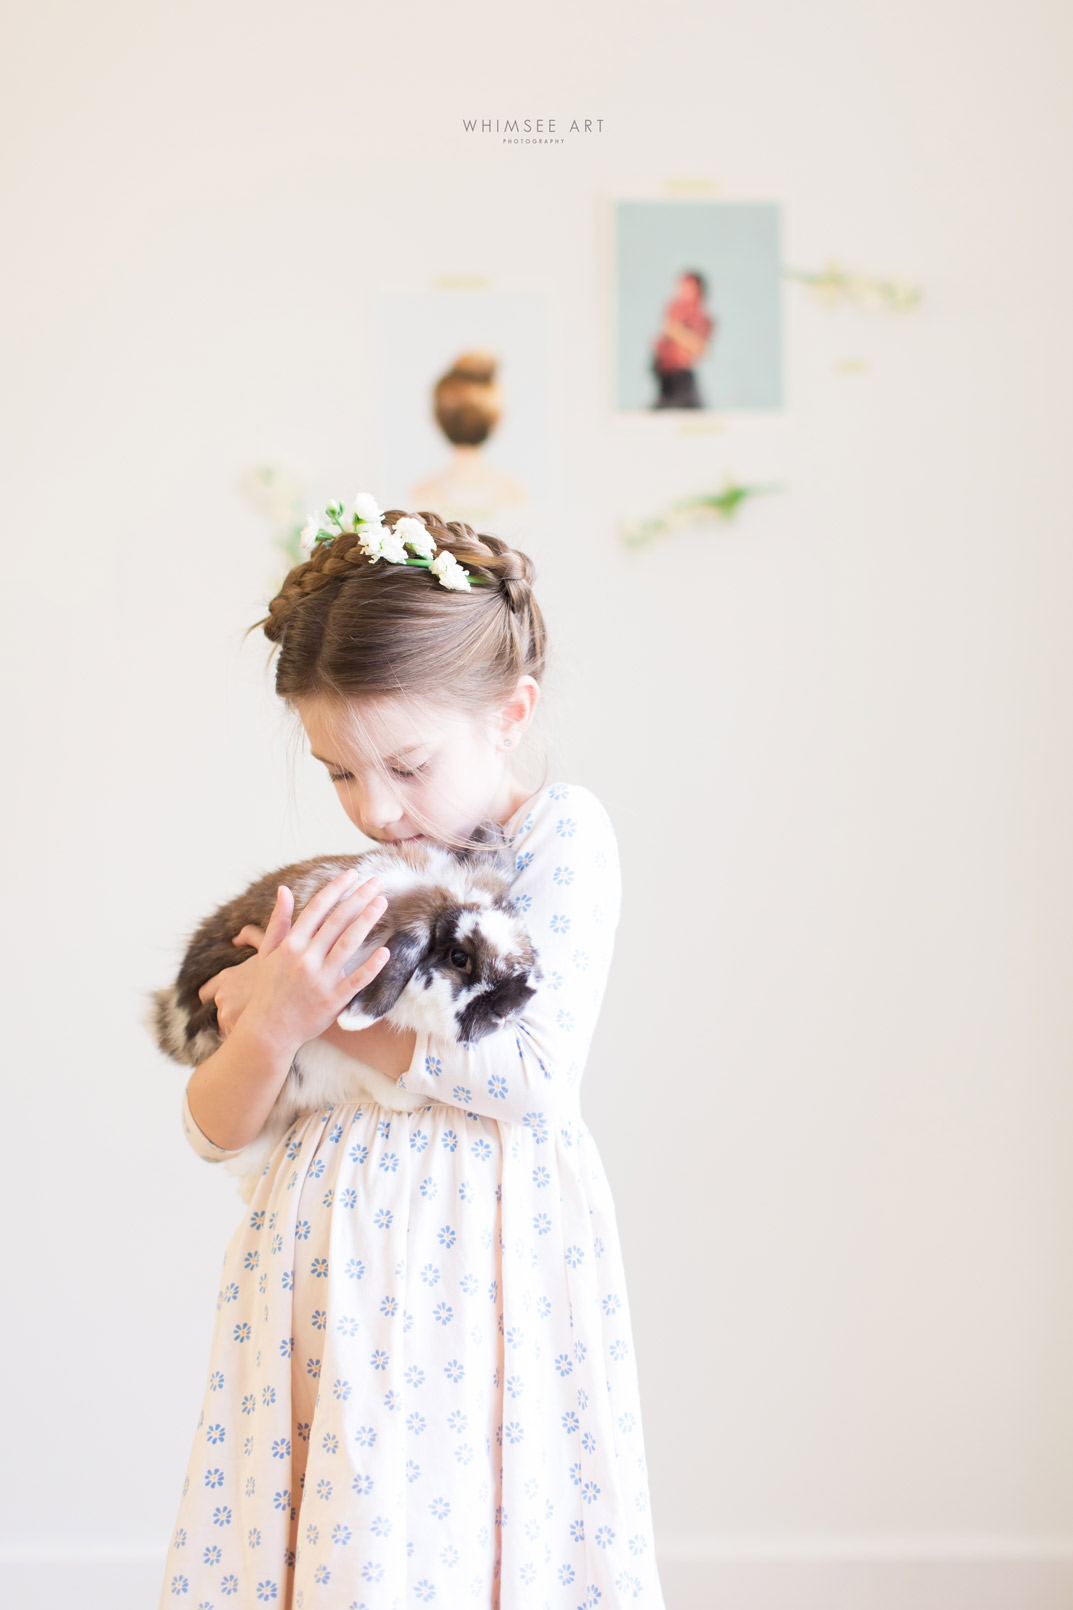 Spring Photographer | Roanoke Child Photographer | Whimsee Art Photography